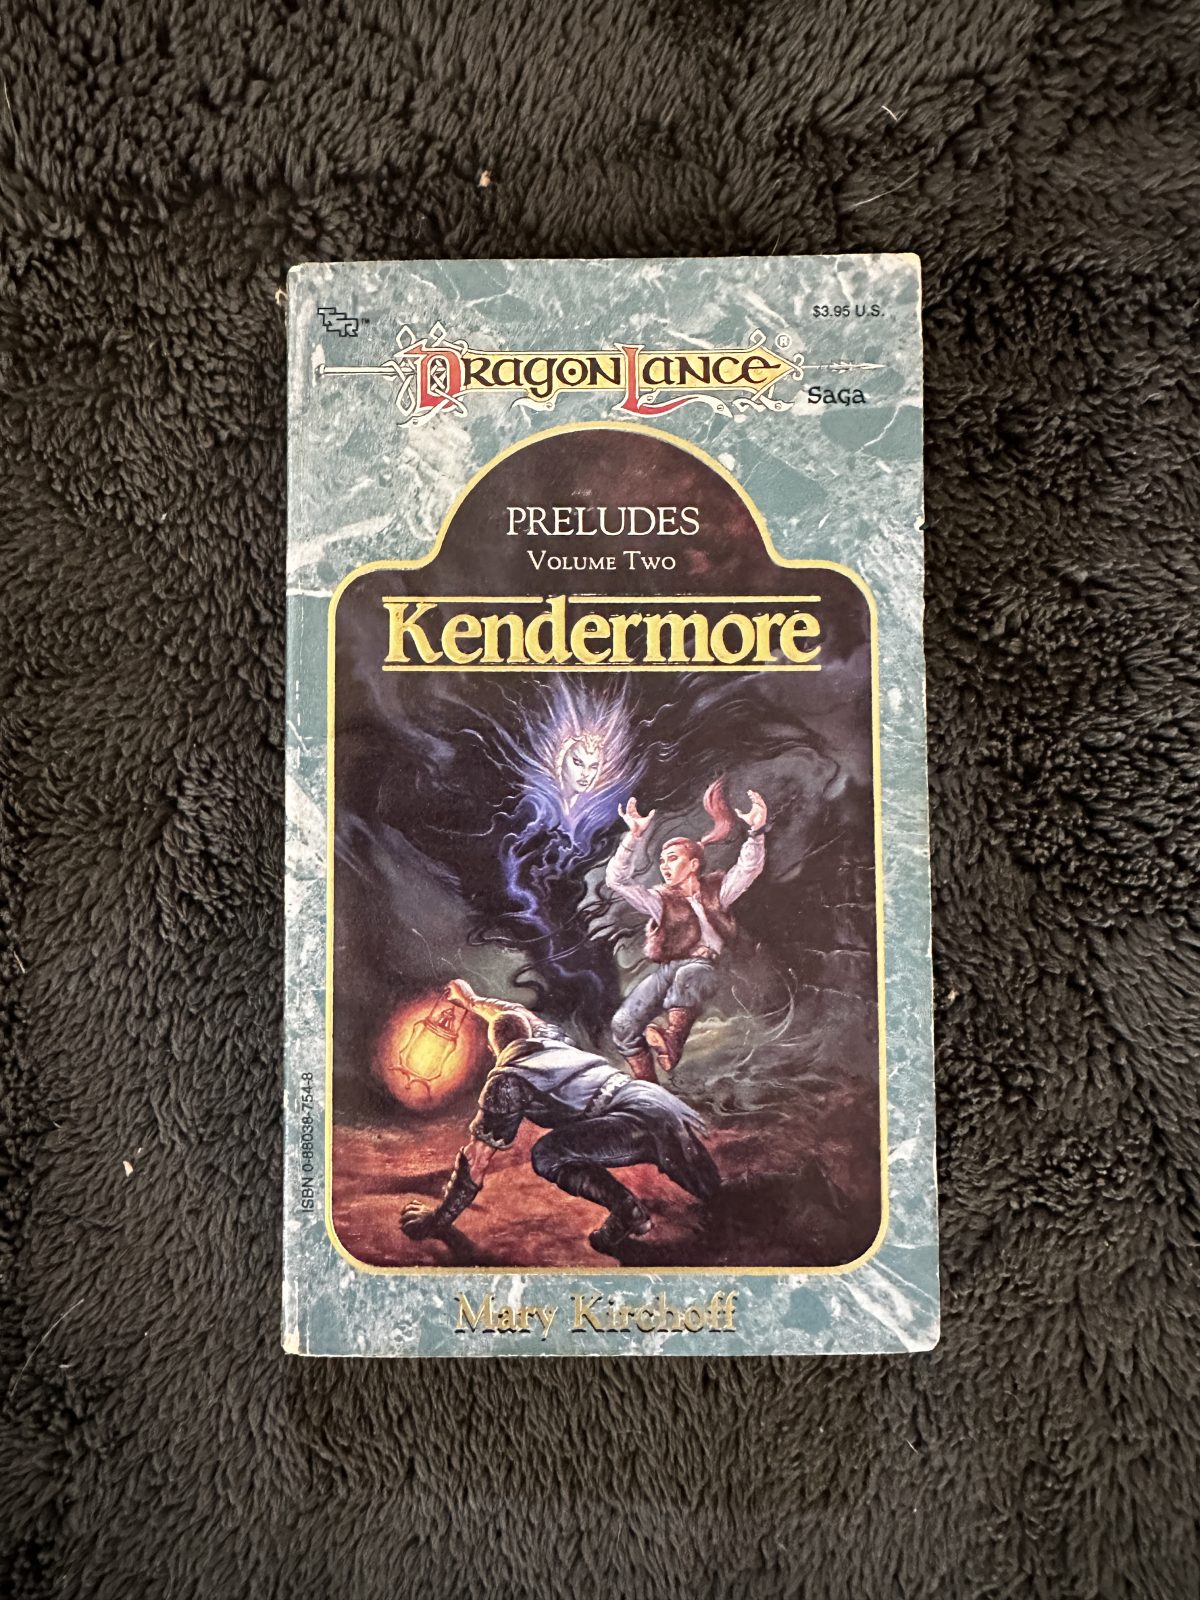 DragonLance Preludes Volume 2: Kendermore